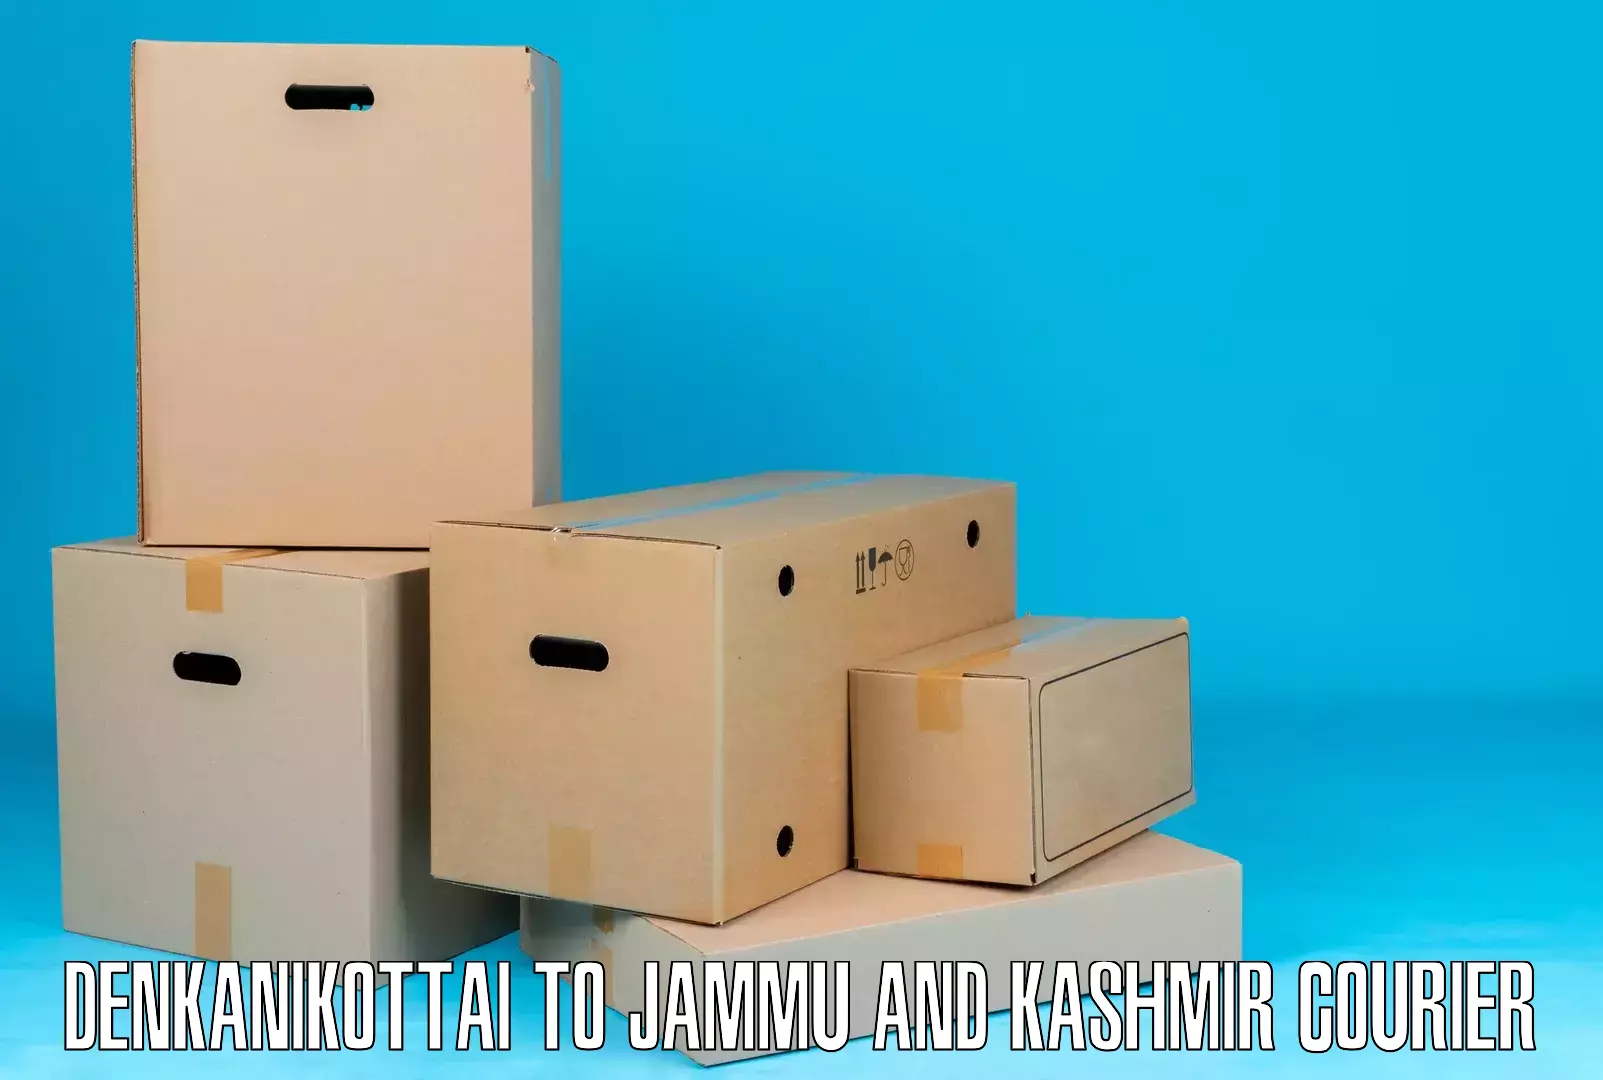 Courier service comparison Denkanikottai to Jammu and Kashmir